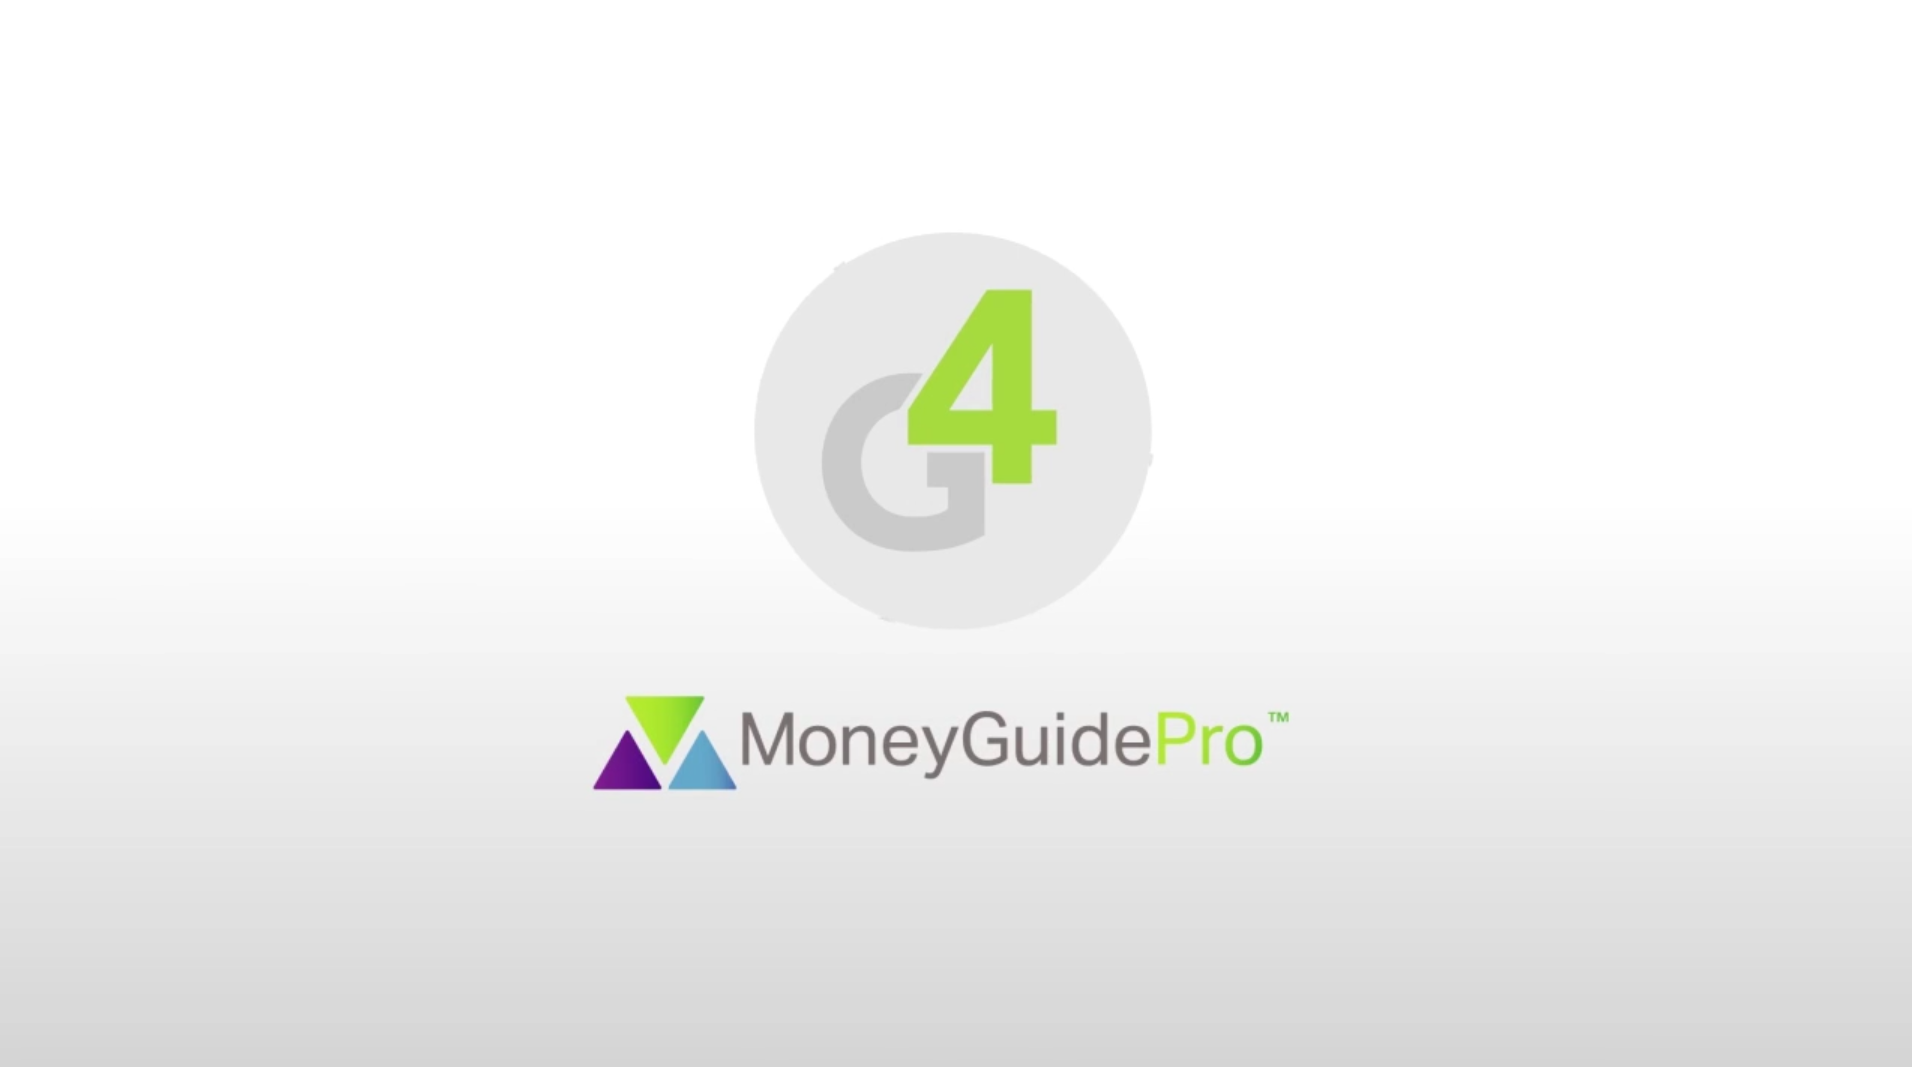 money guide pro